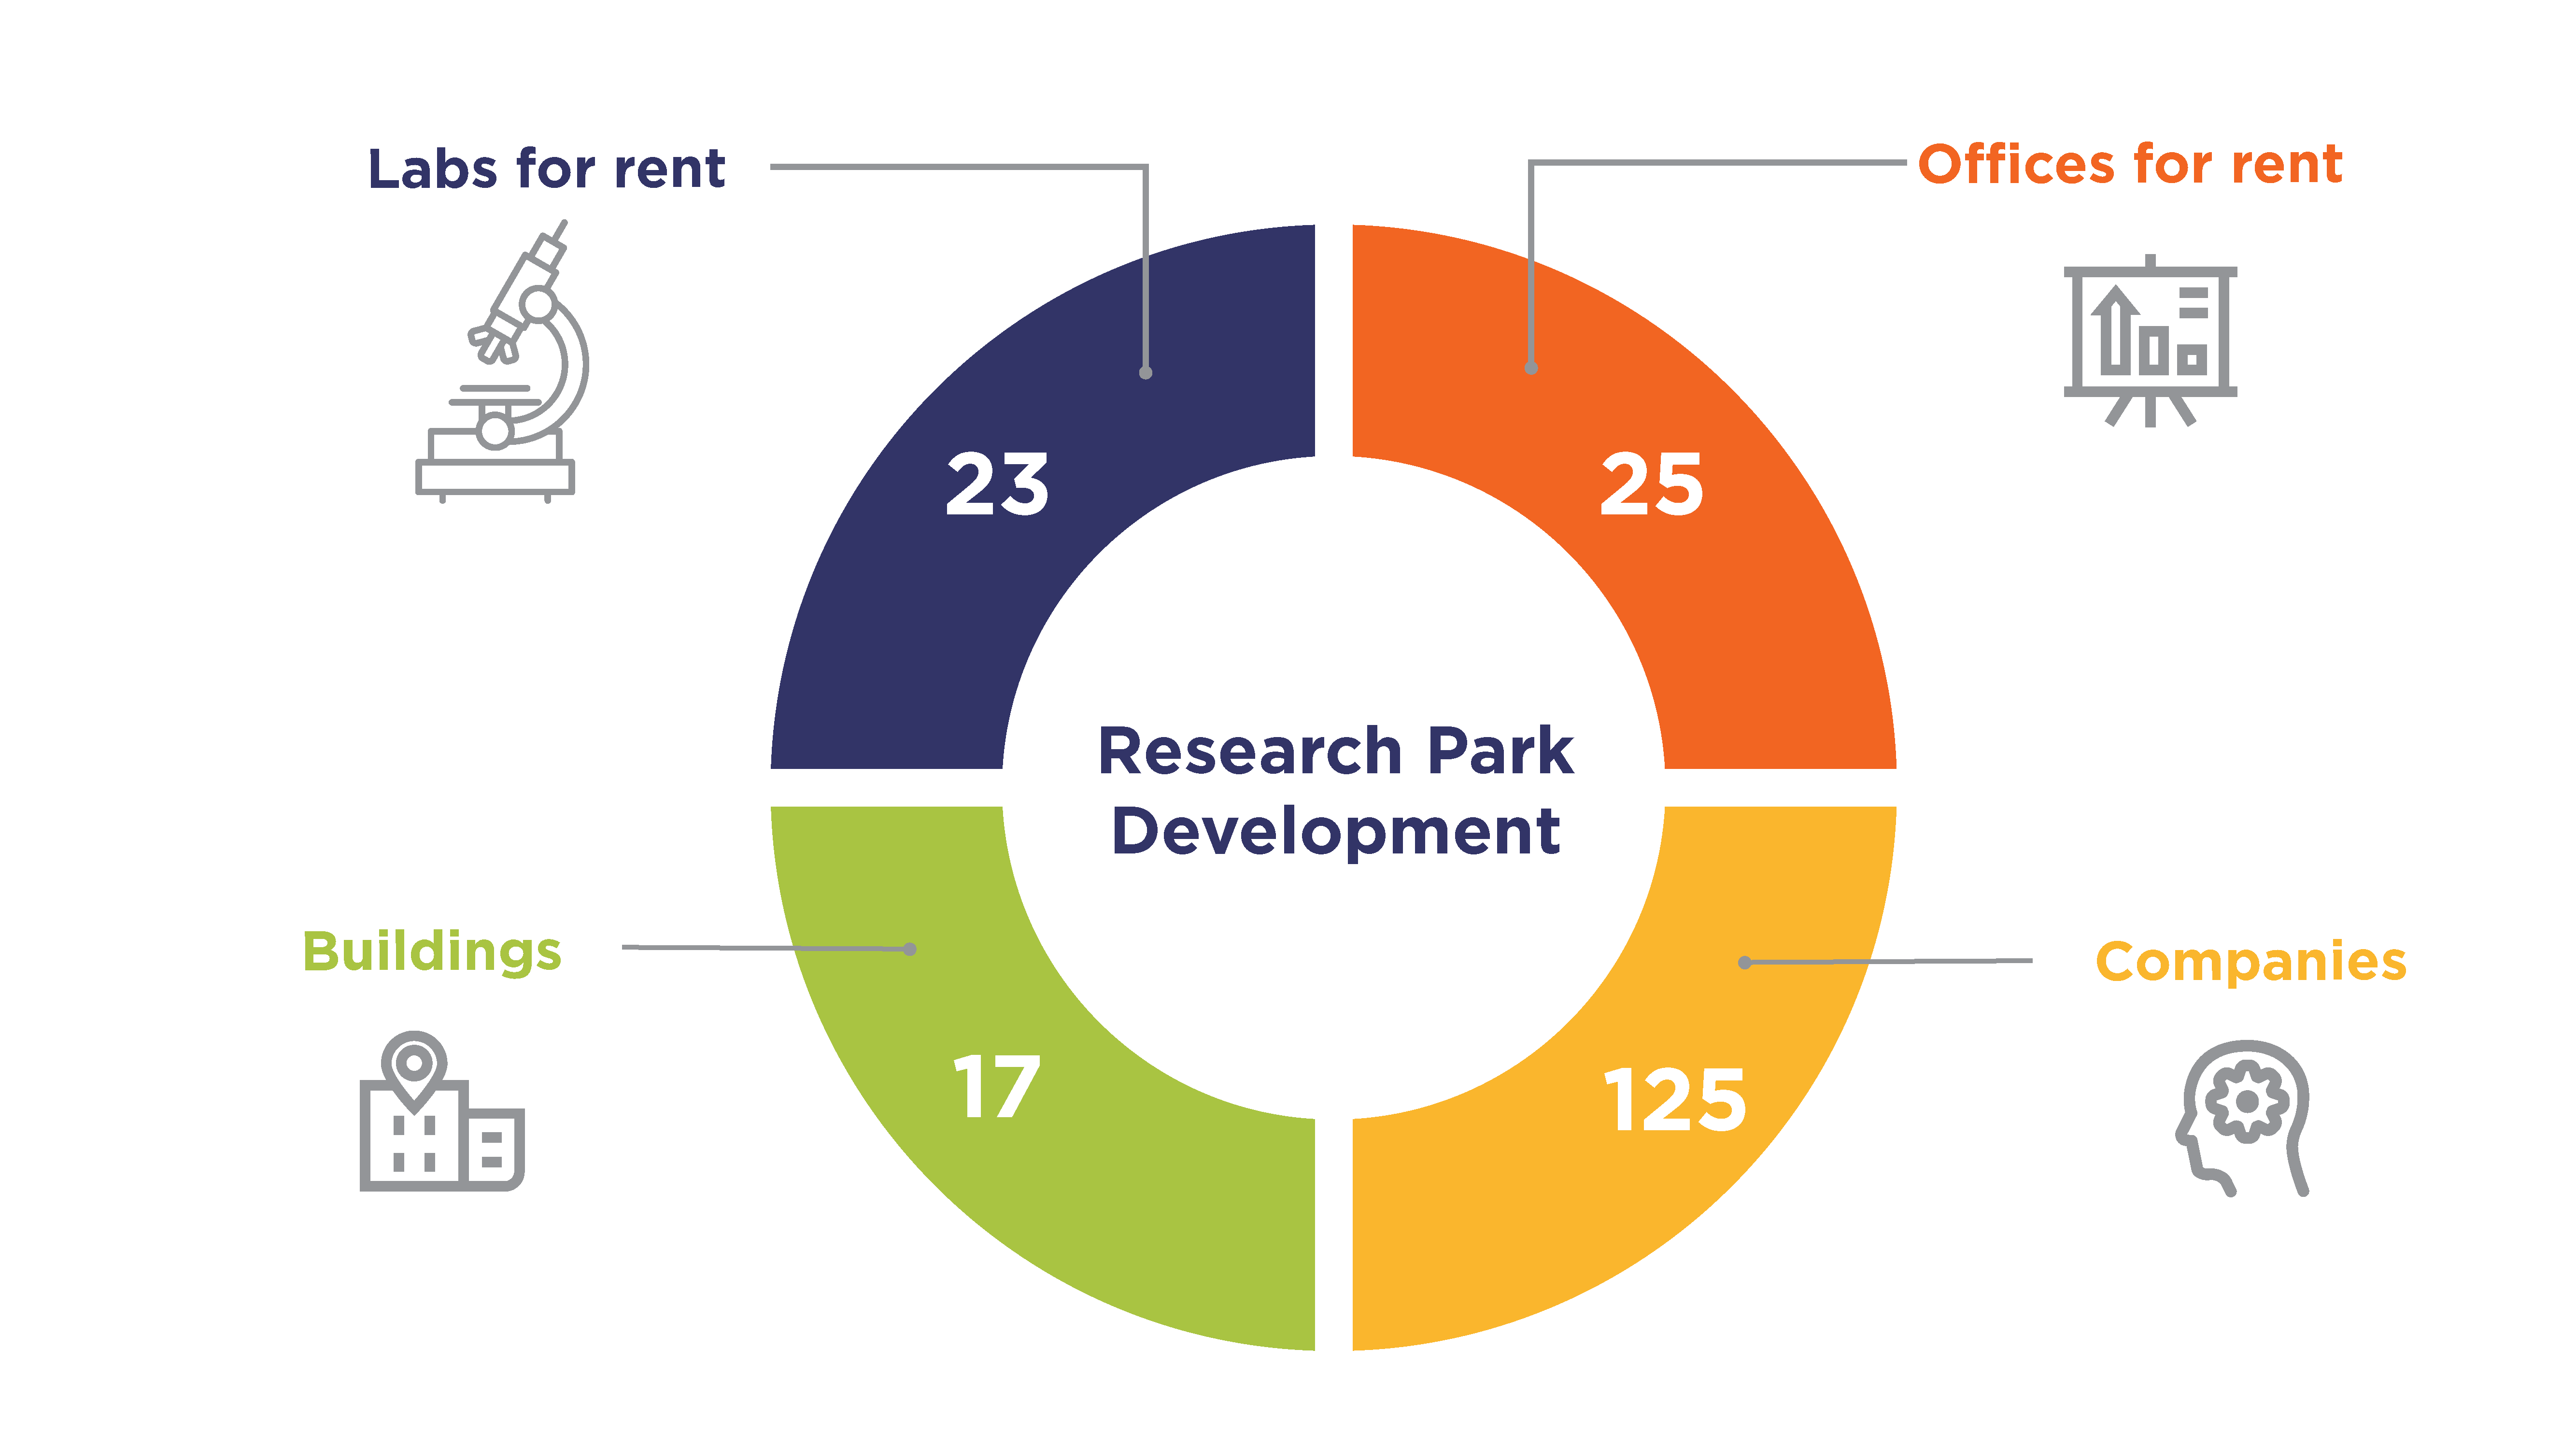 Research Park Development